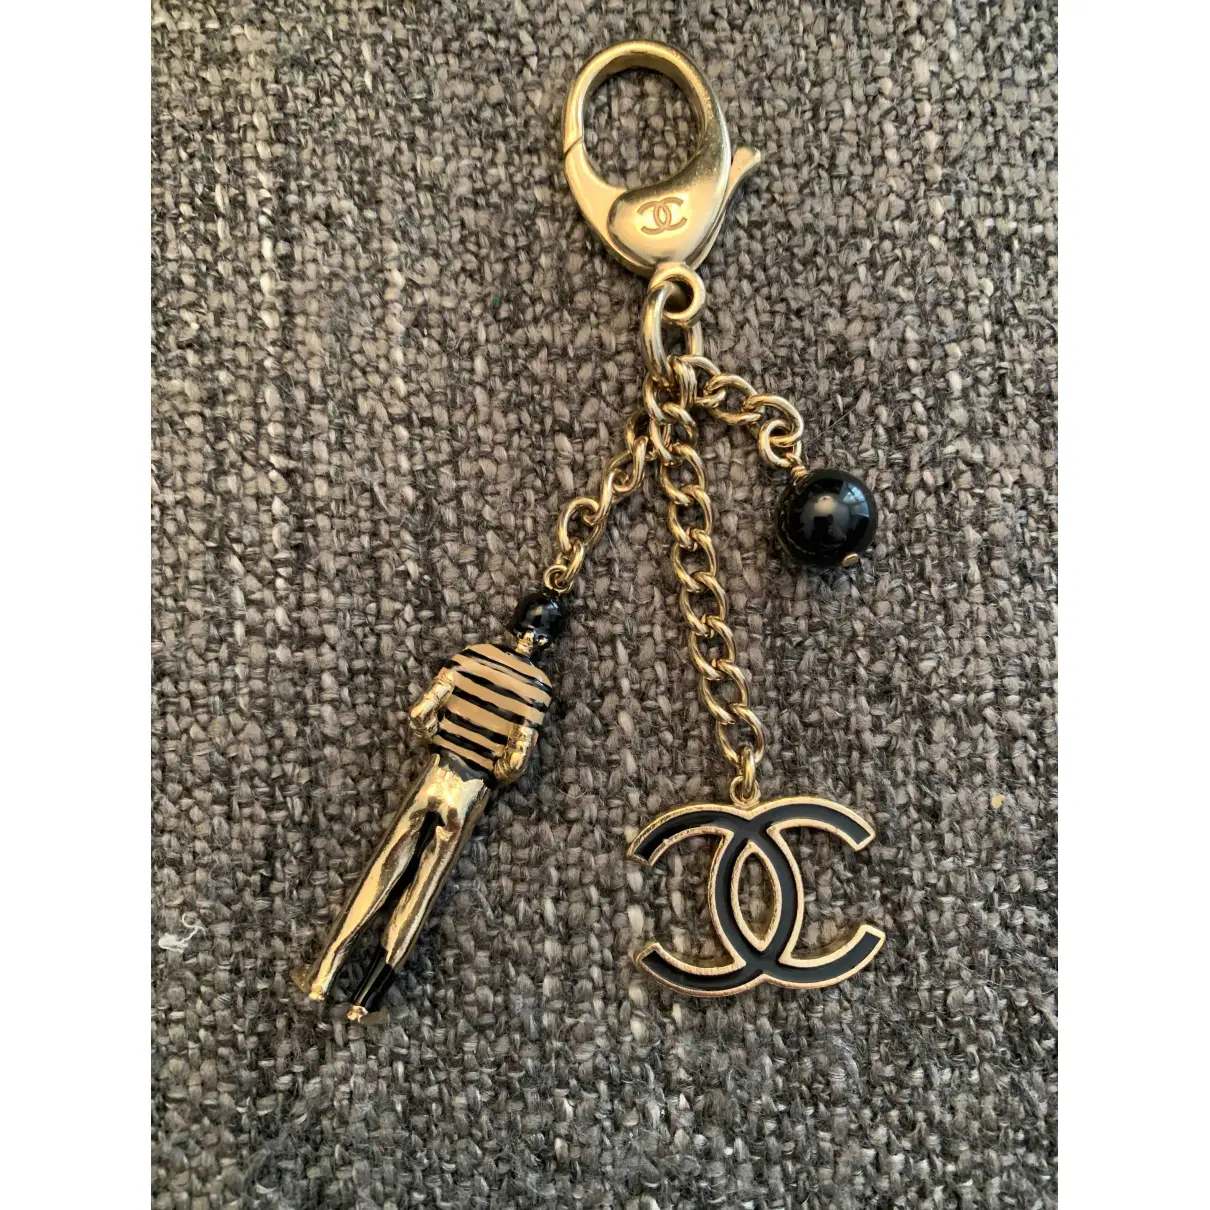 Buy Chanel Key ring online